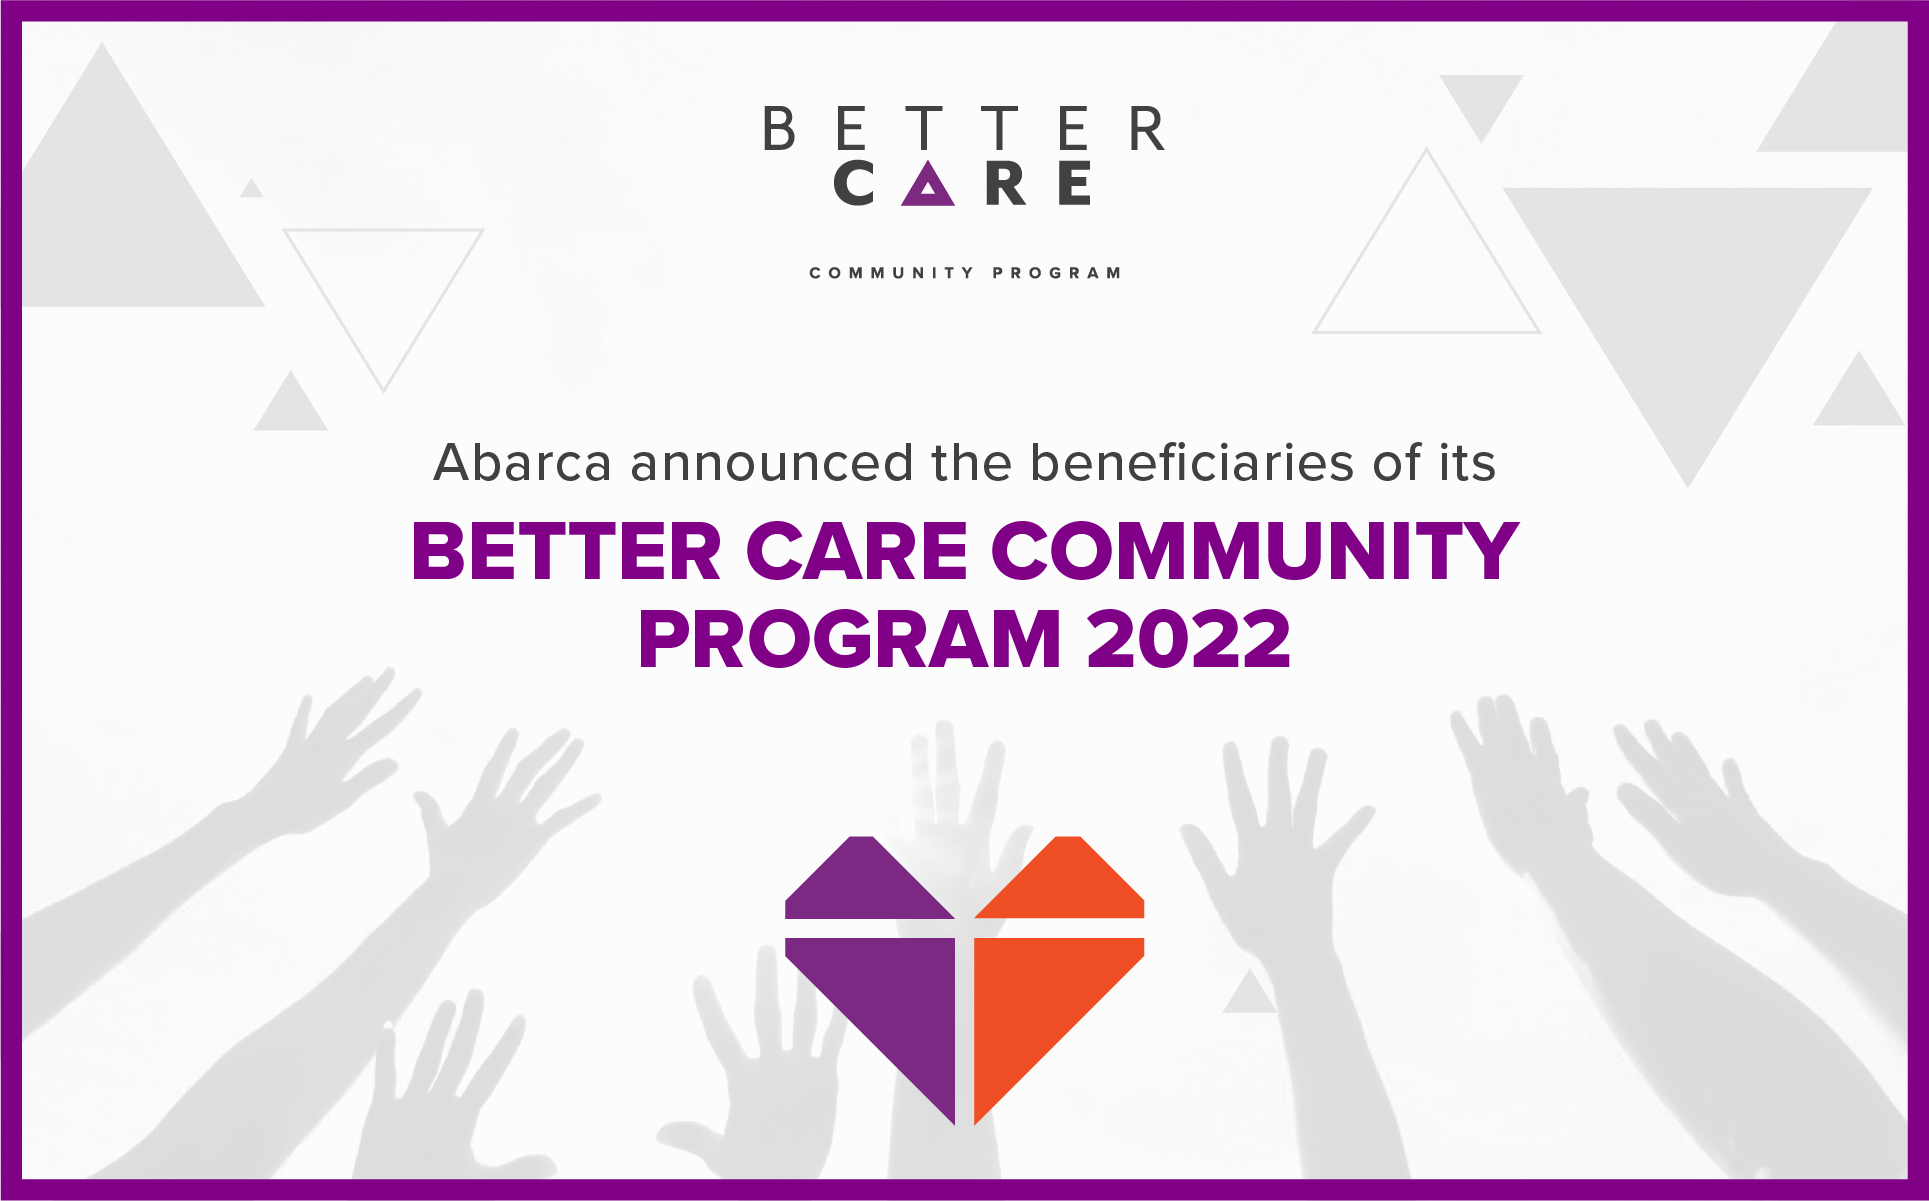 Abarca announces its Better Care Community Program 2022 Beneficiaries!